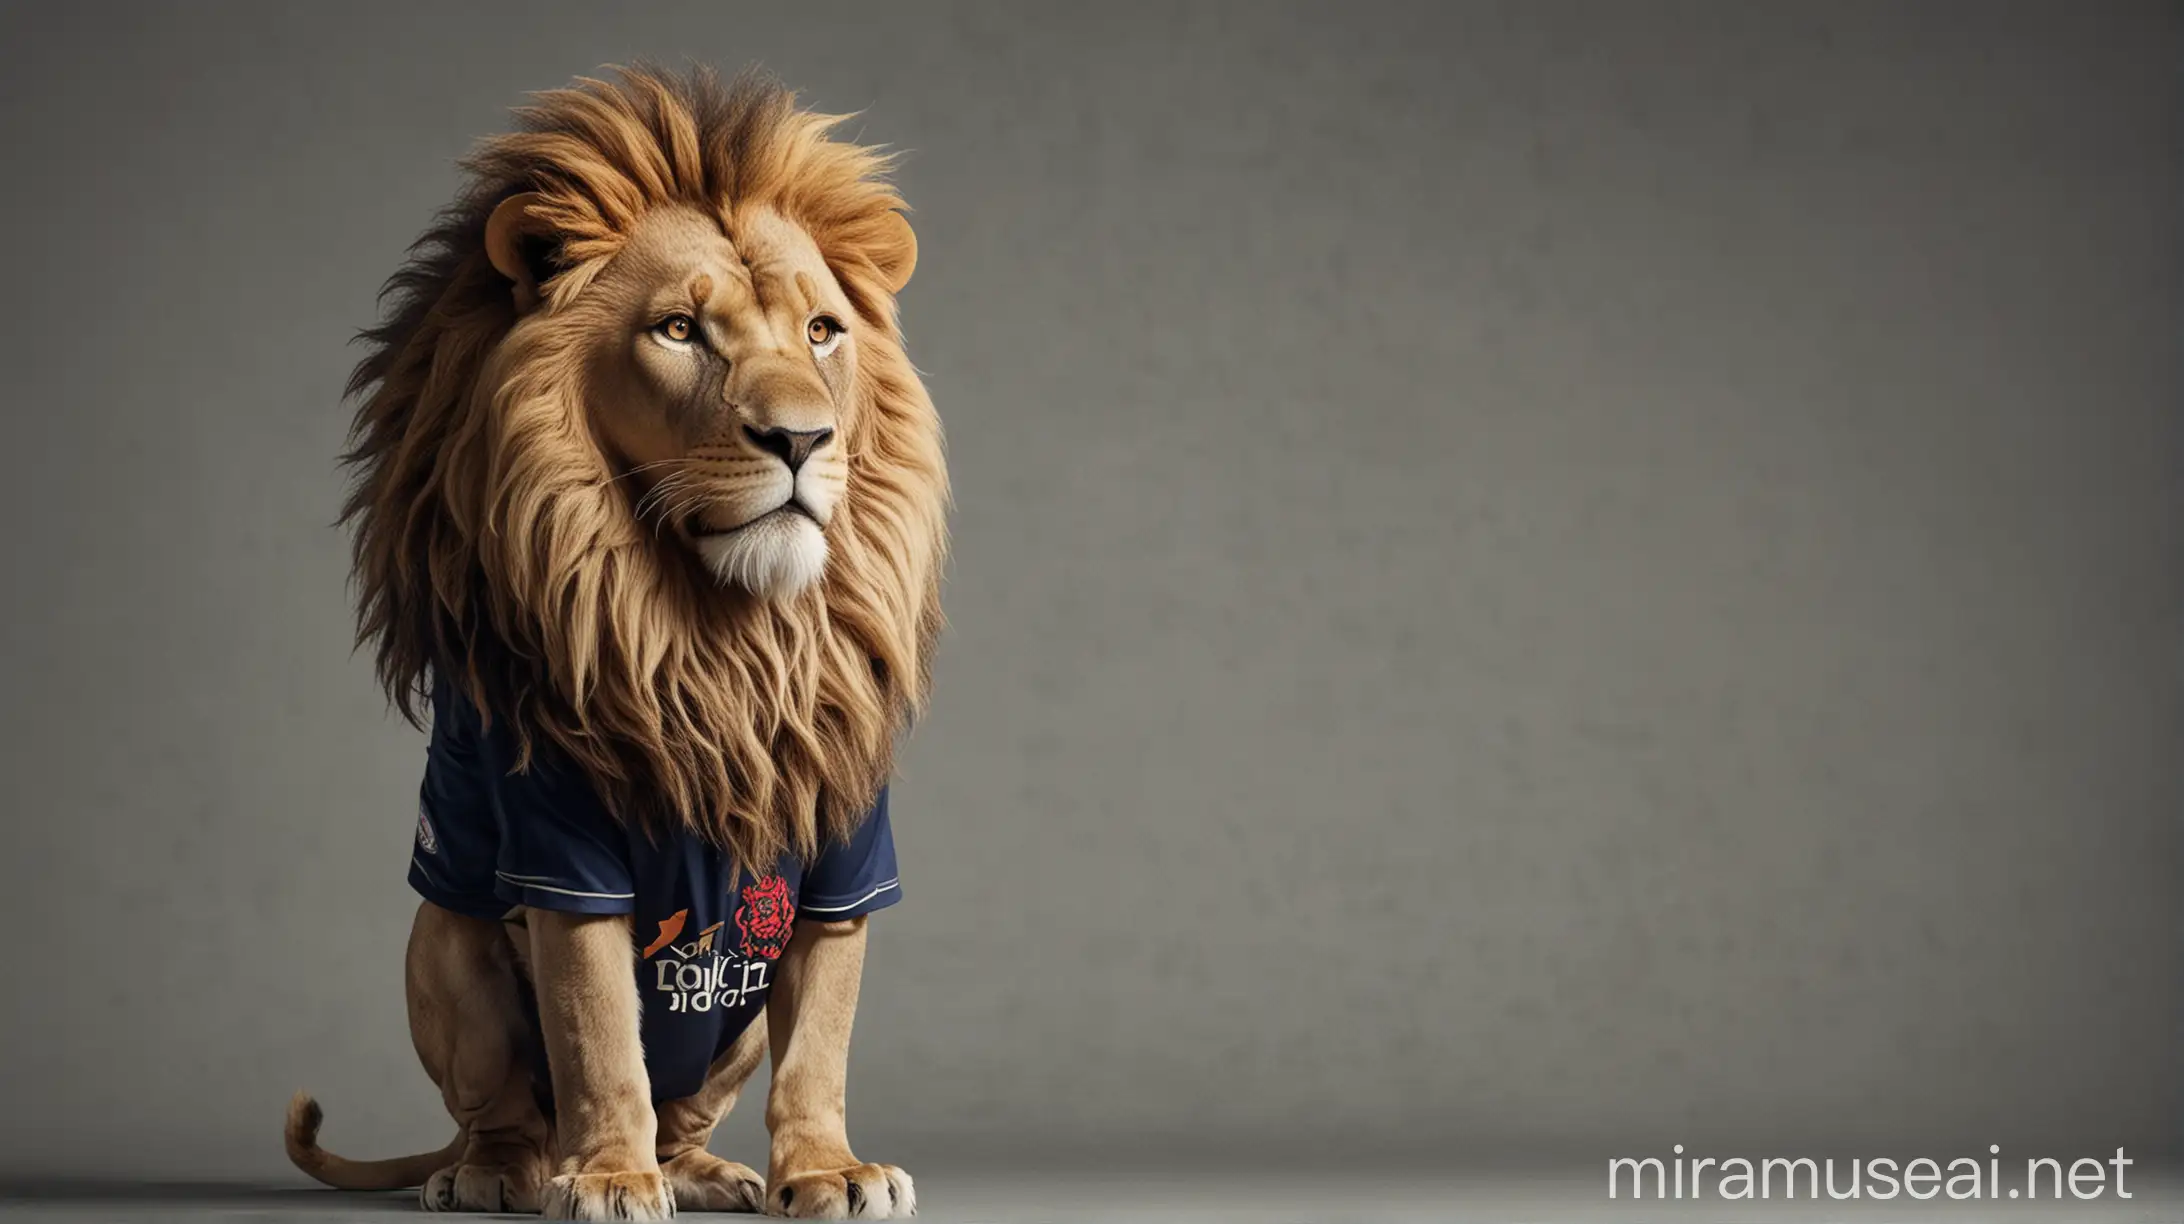 Lion Wearing English Team Shirt Majestic Lion Supporting English Football